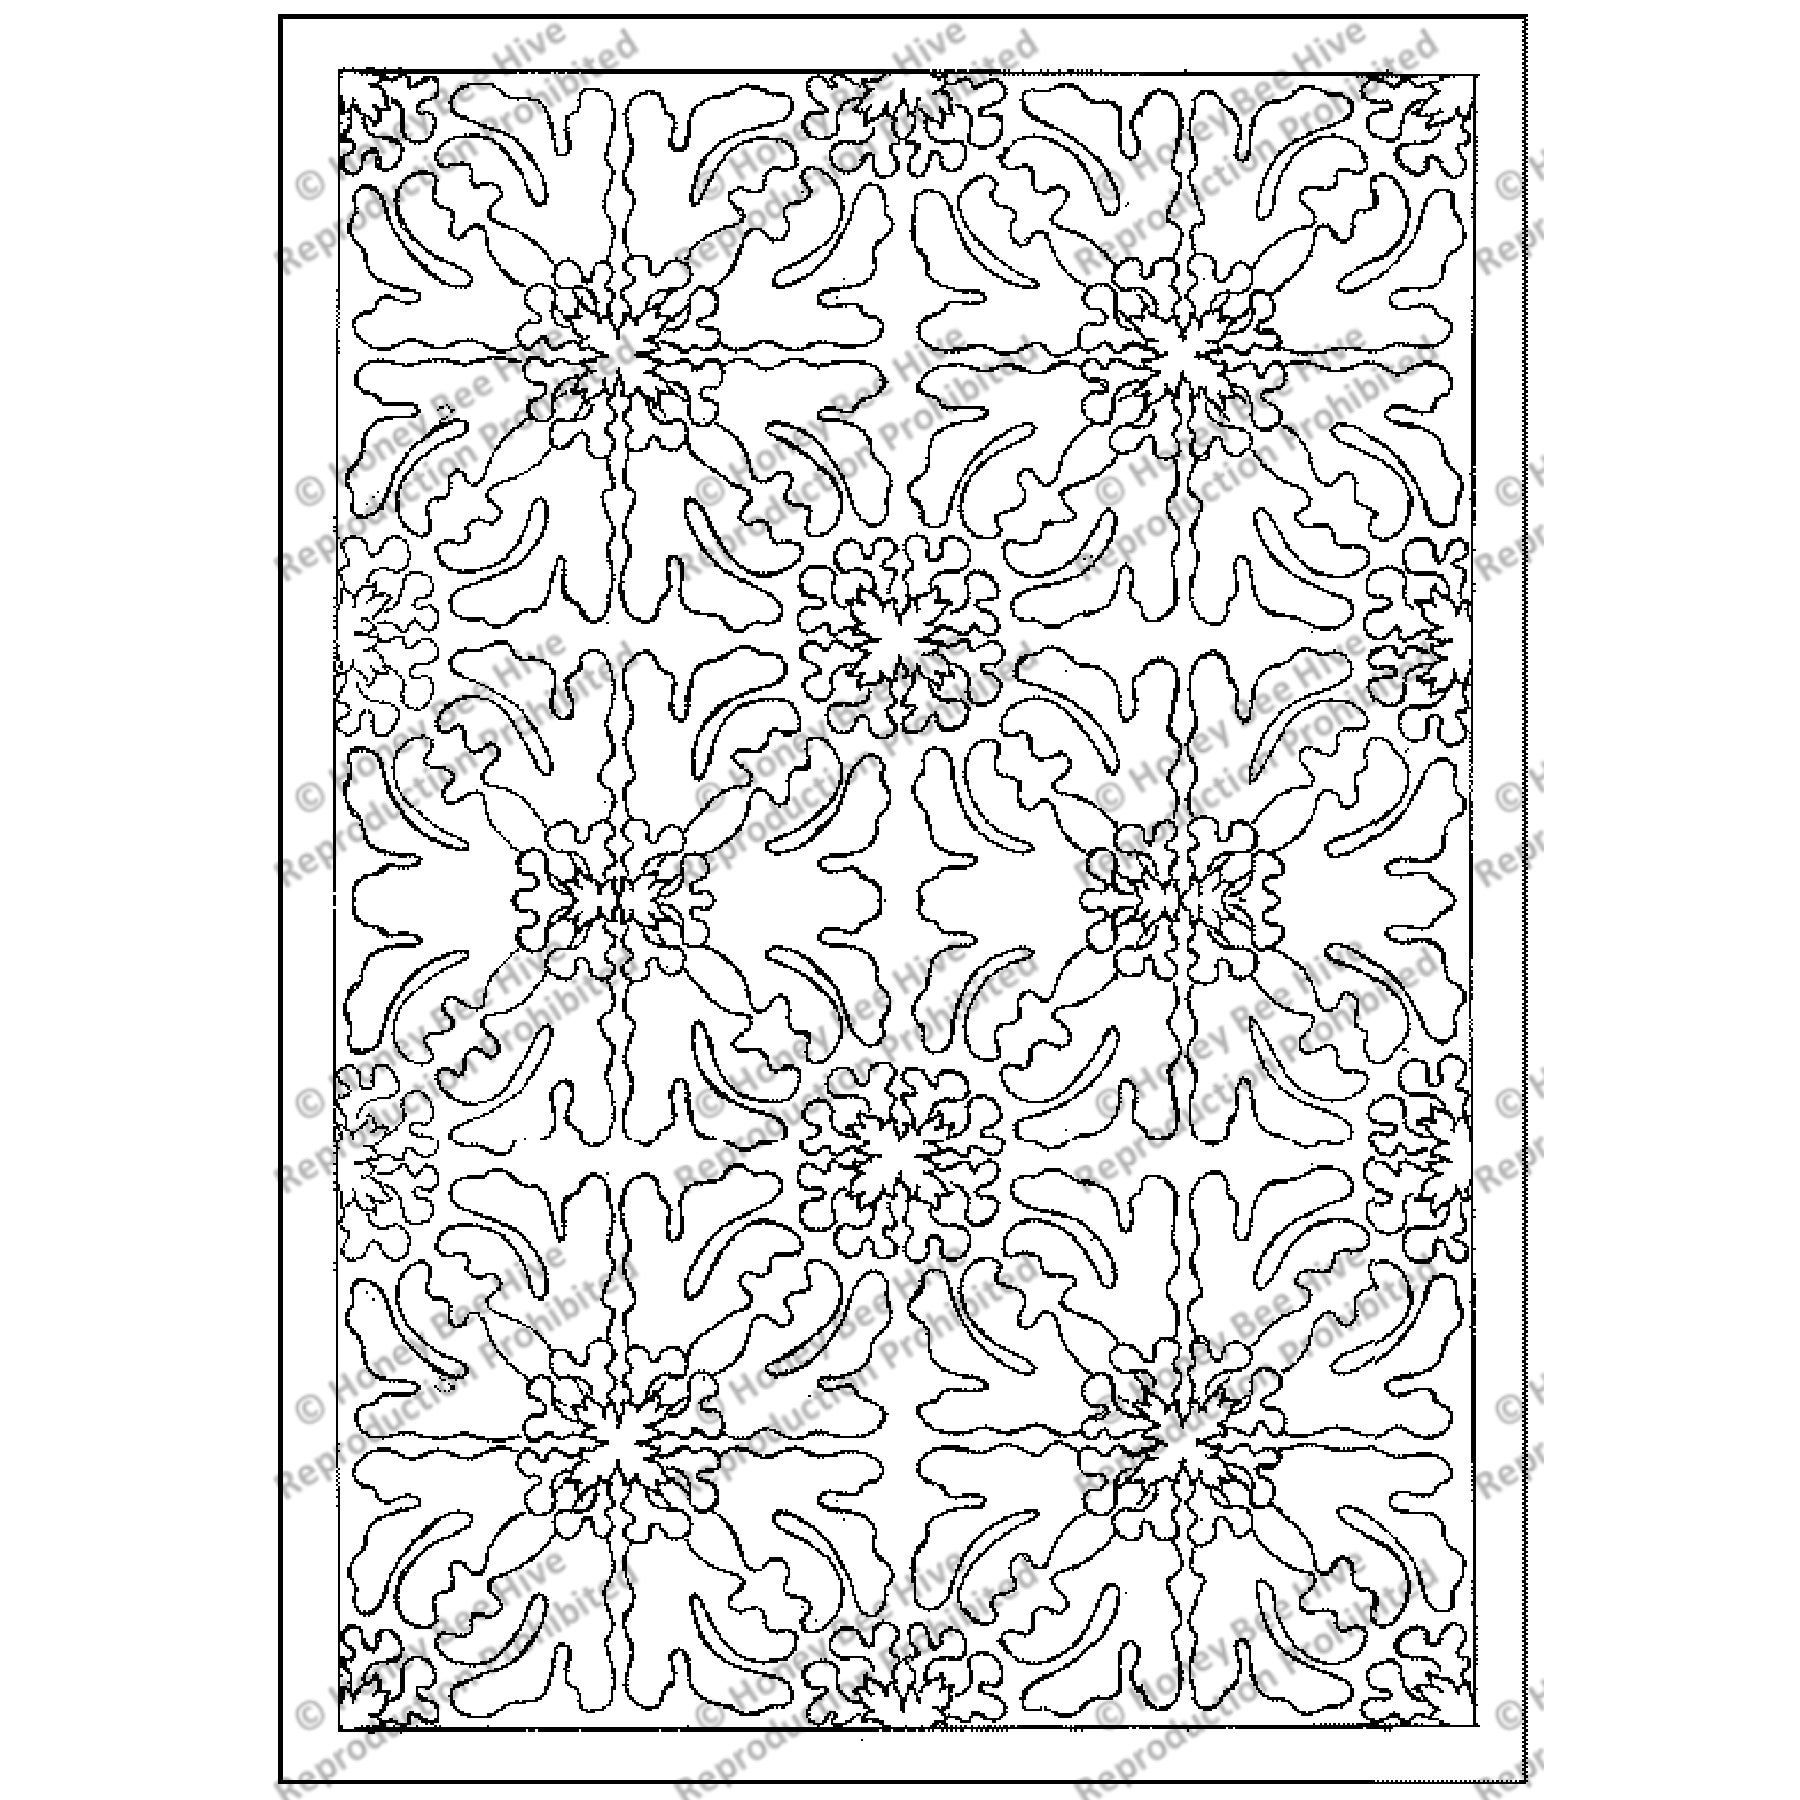 Charisma, rug hooking pattern